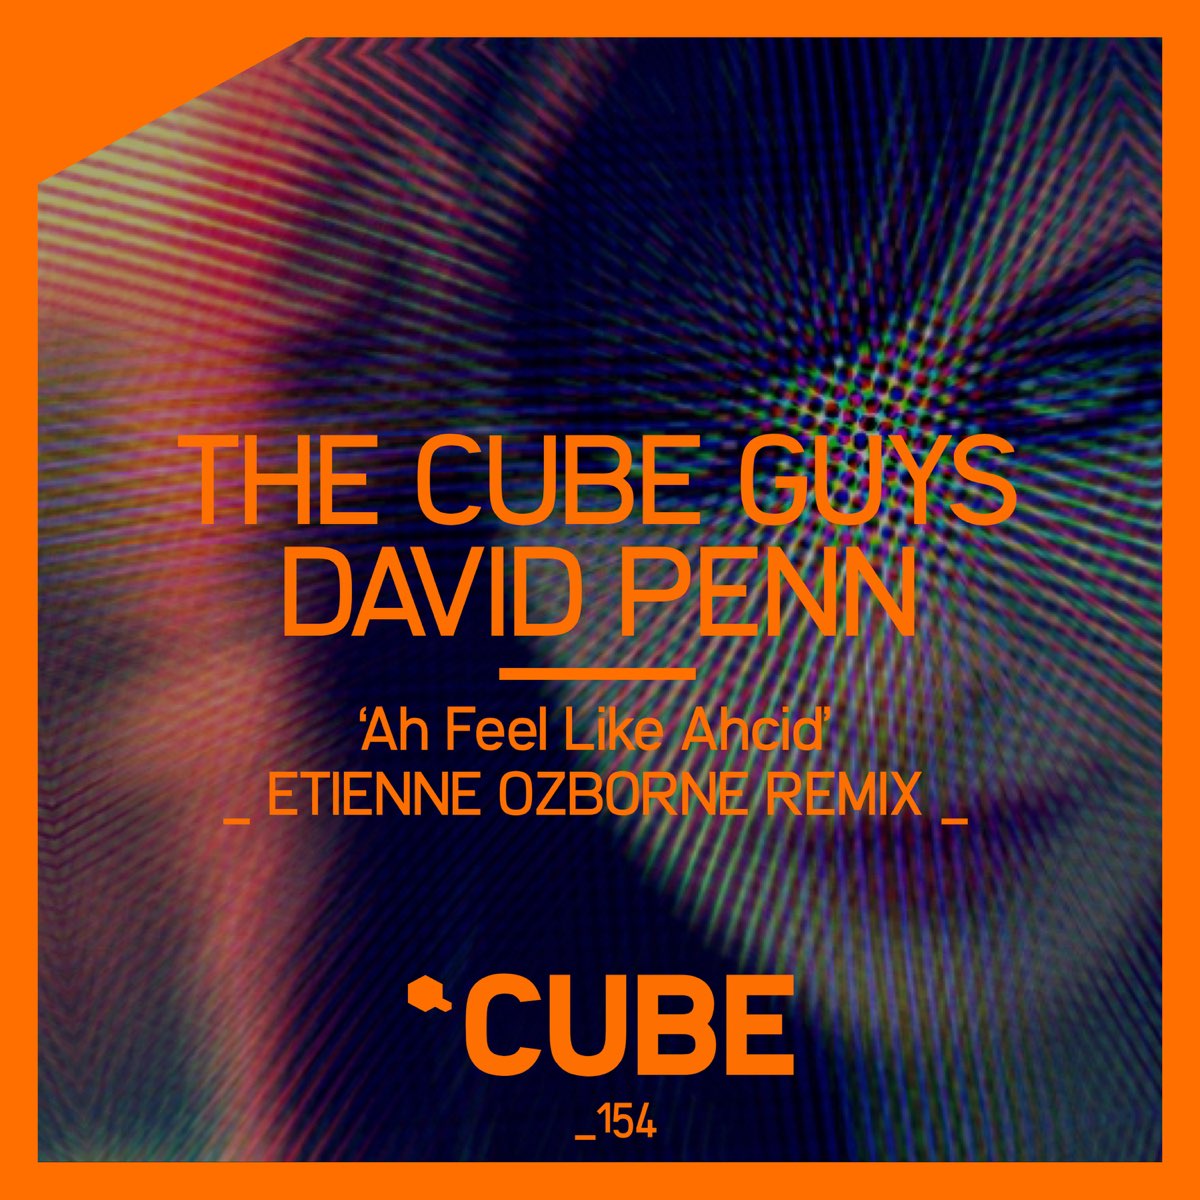 Cube remix. The Cube guys. The Cube guys, David Penn Ah feel like Ahcid (Etienne Ozborne Remix). David Penn.